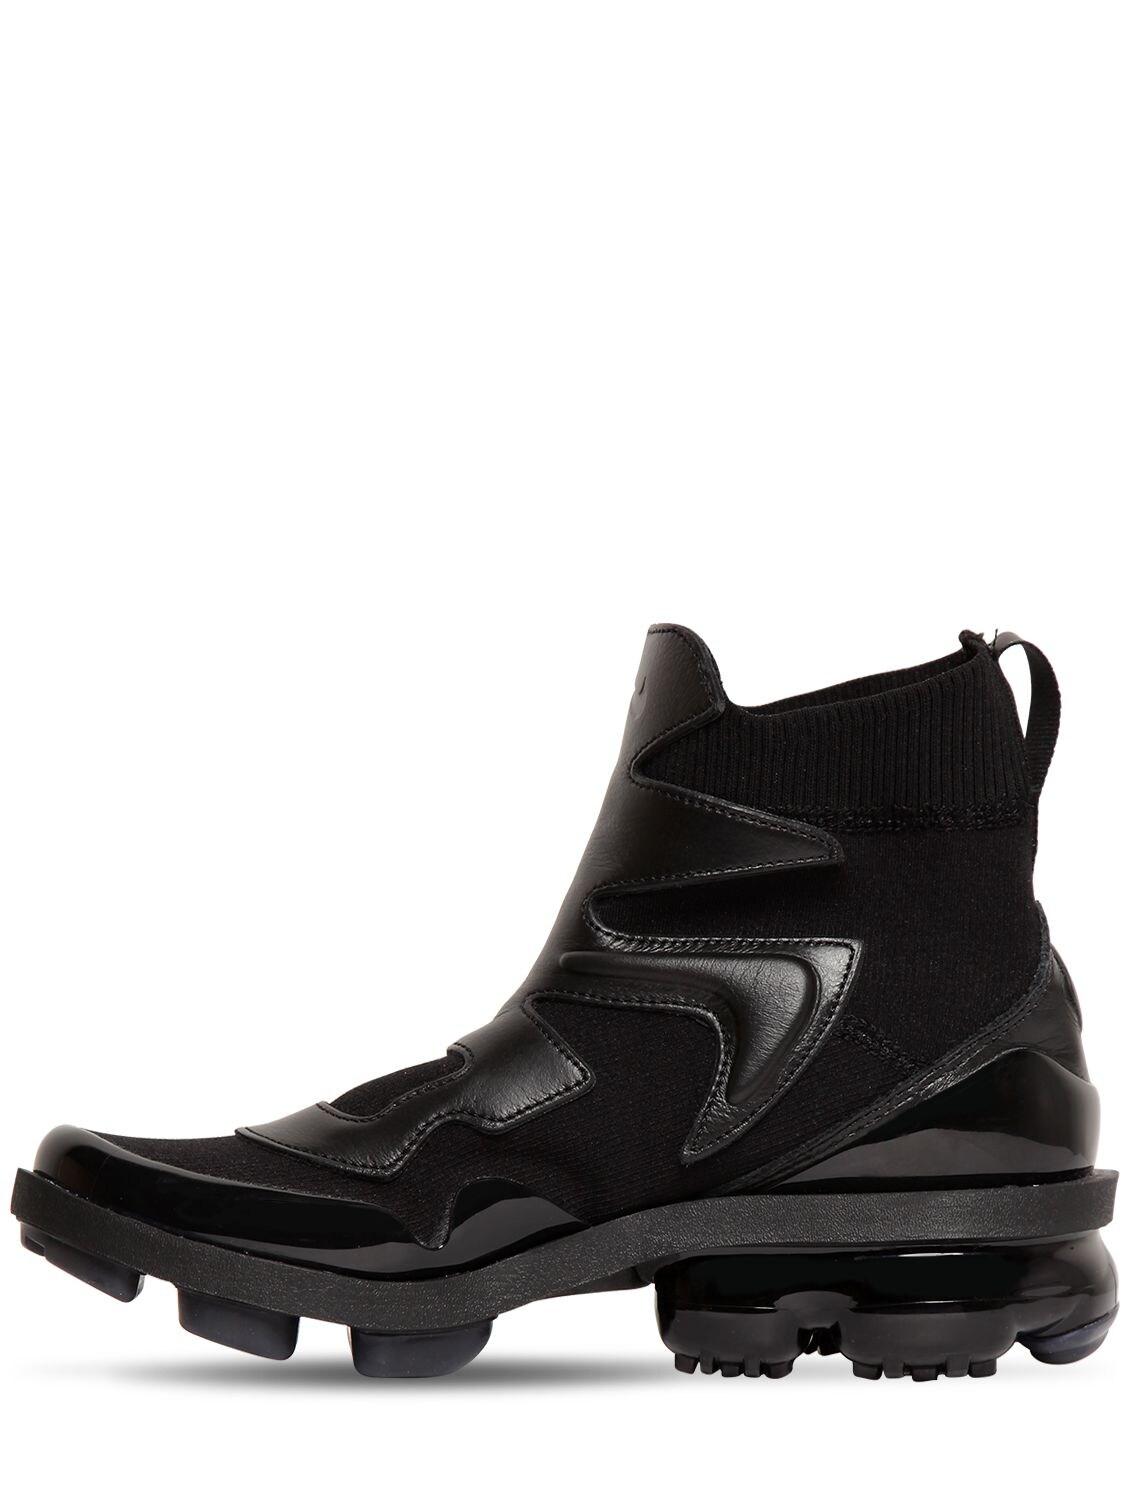 Nike Leather Vapormax Light Ii Hi-top Sneakers in Black | Lyst